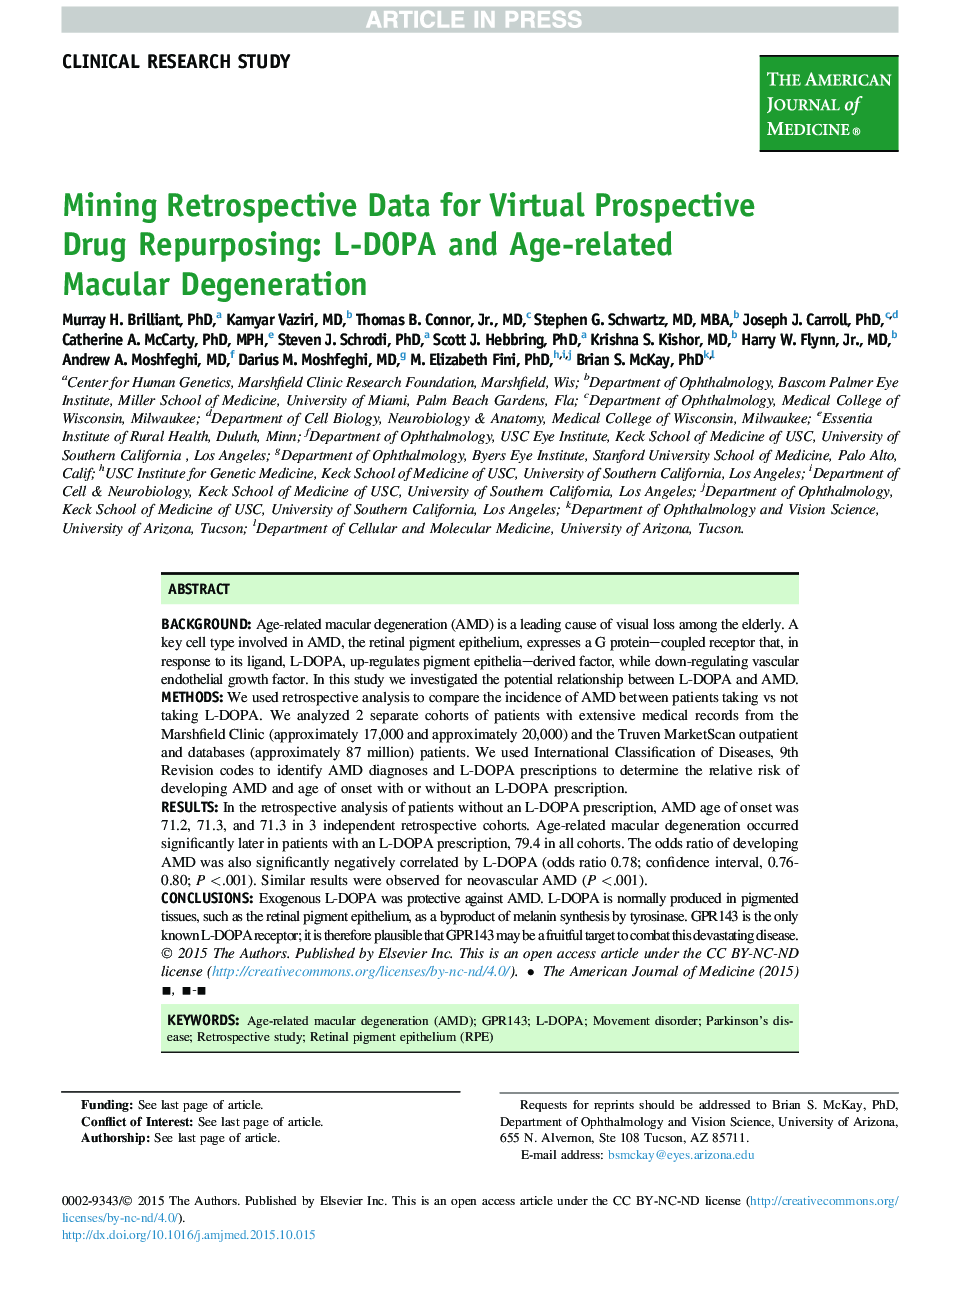 Mining Retrospective Data for Virtual Prospective Drug Repurposing: L-DOPA and Age-related Macular Degeneration